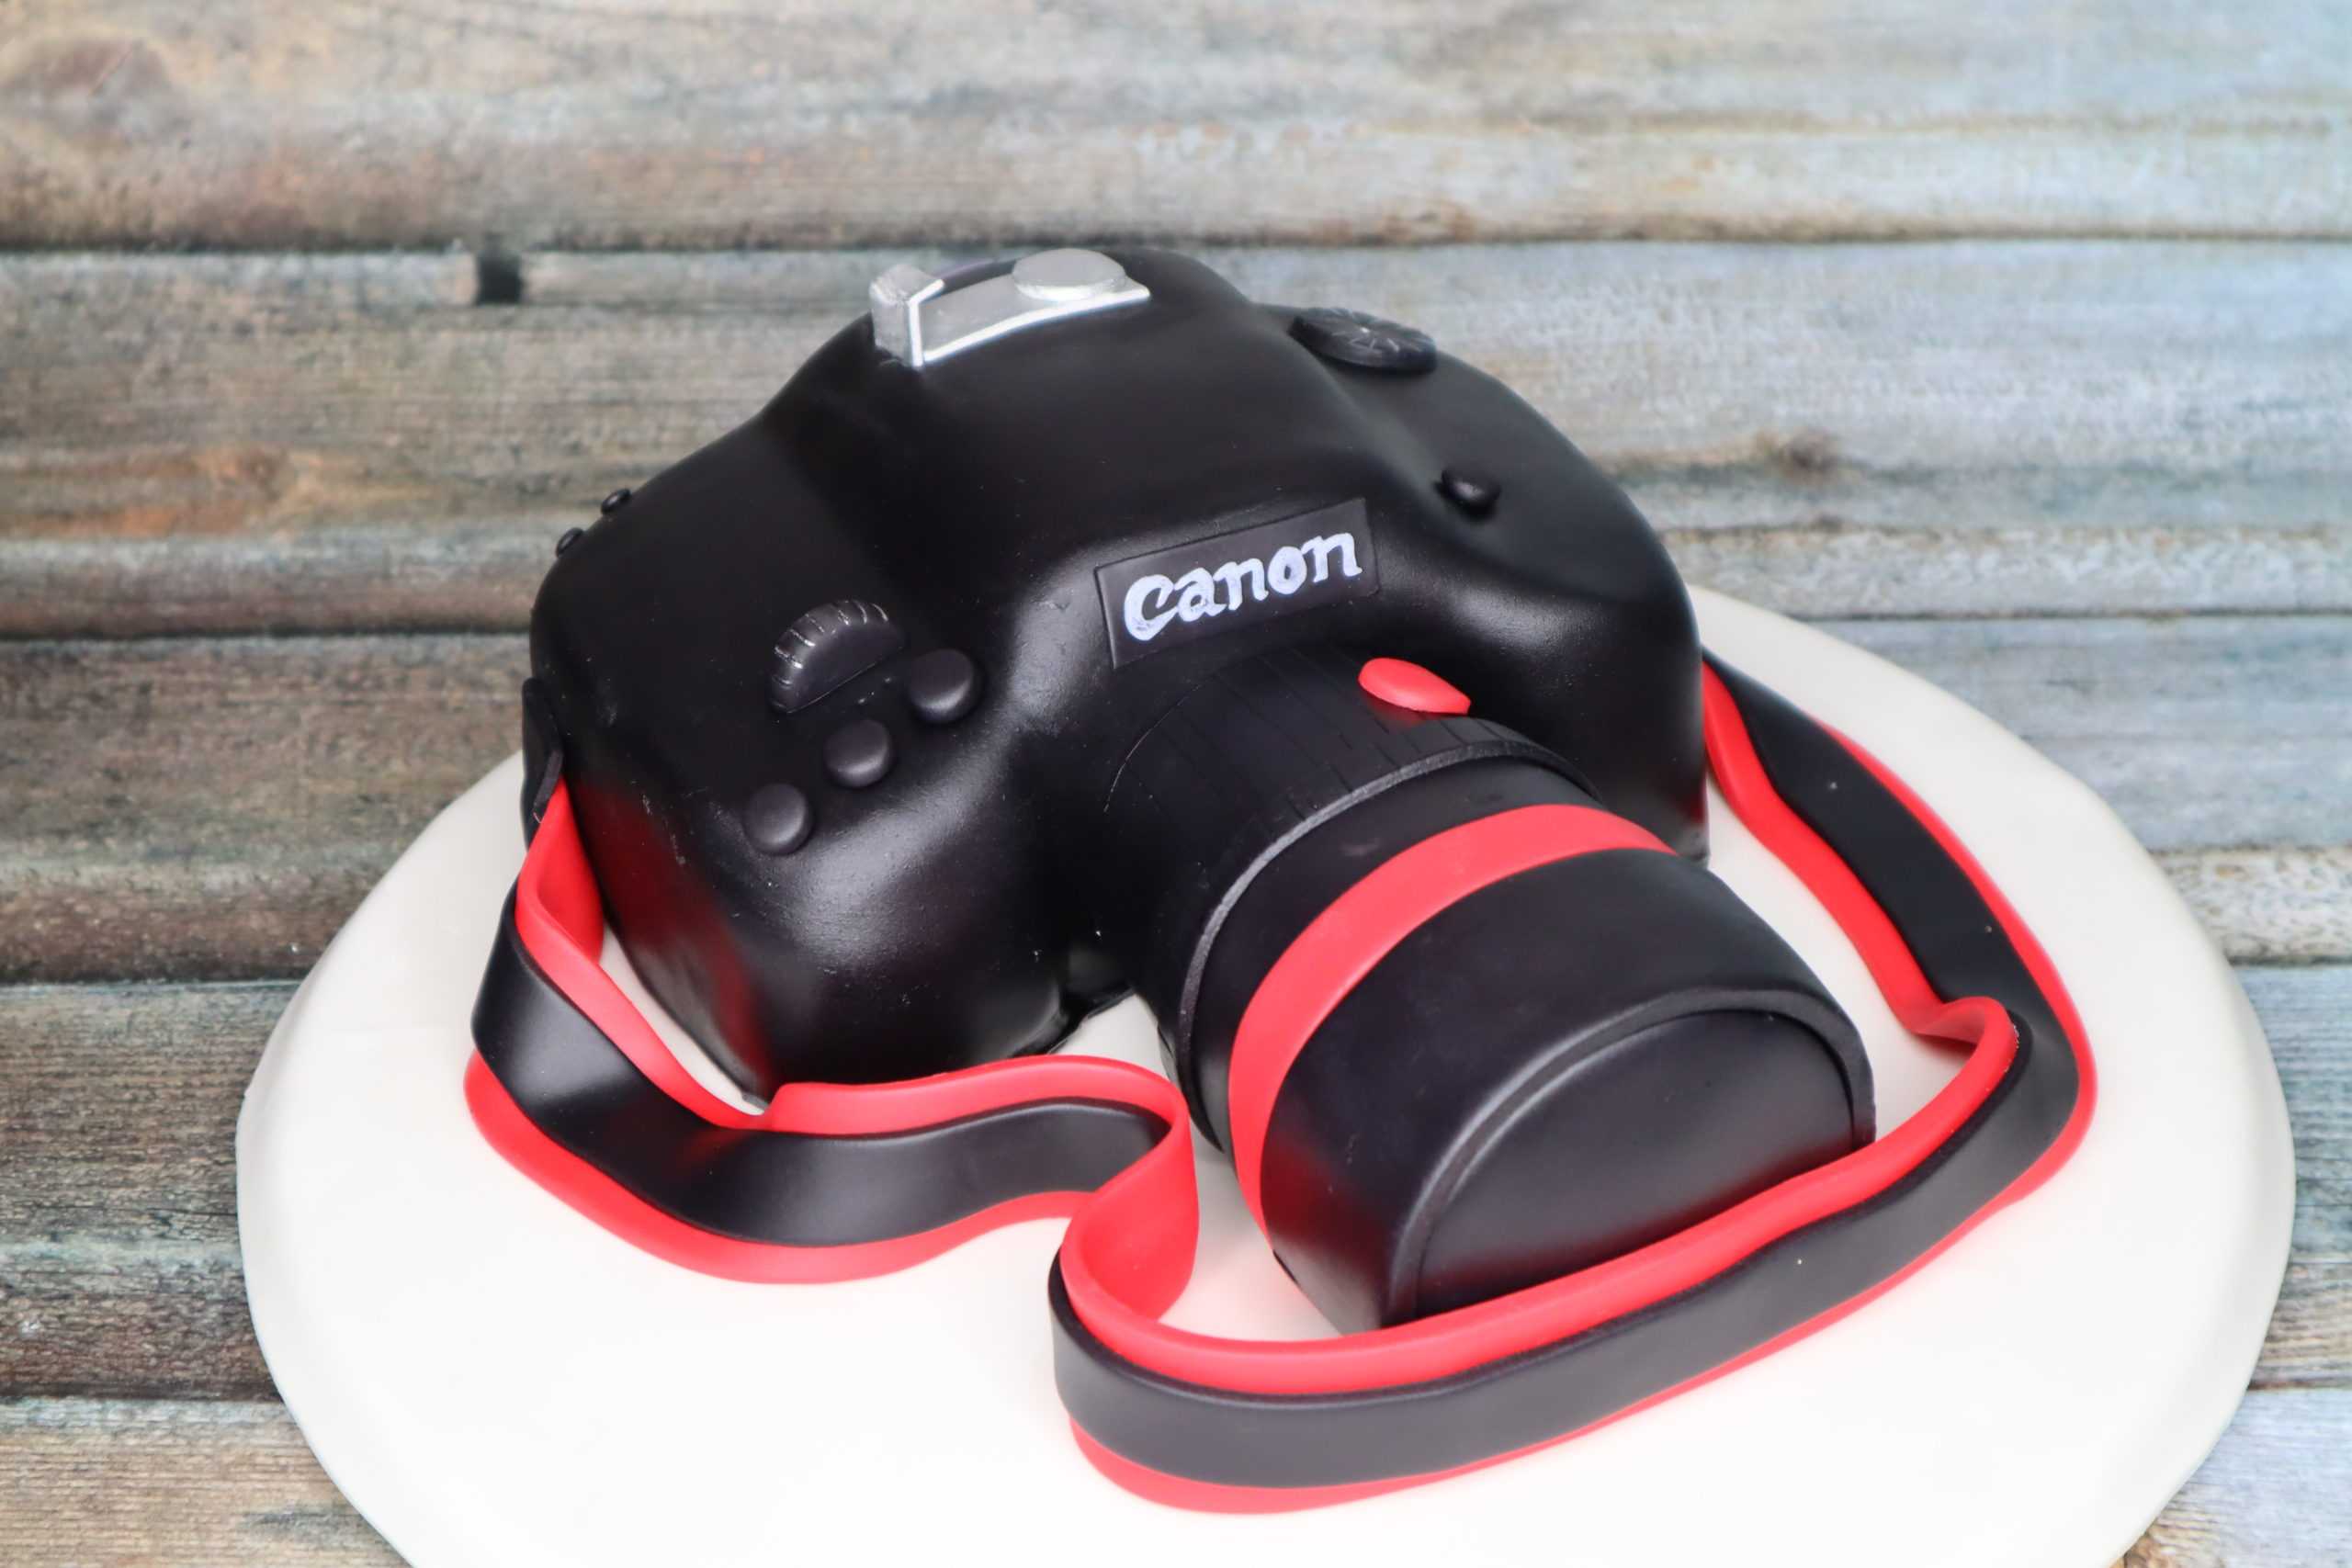 Canon Camera Birthday Cake | 30th birthday cake made for a k… | Flickr